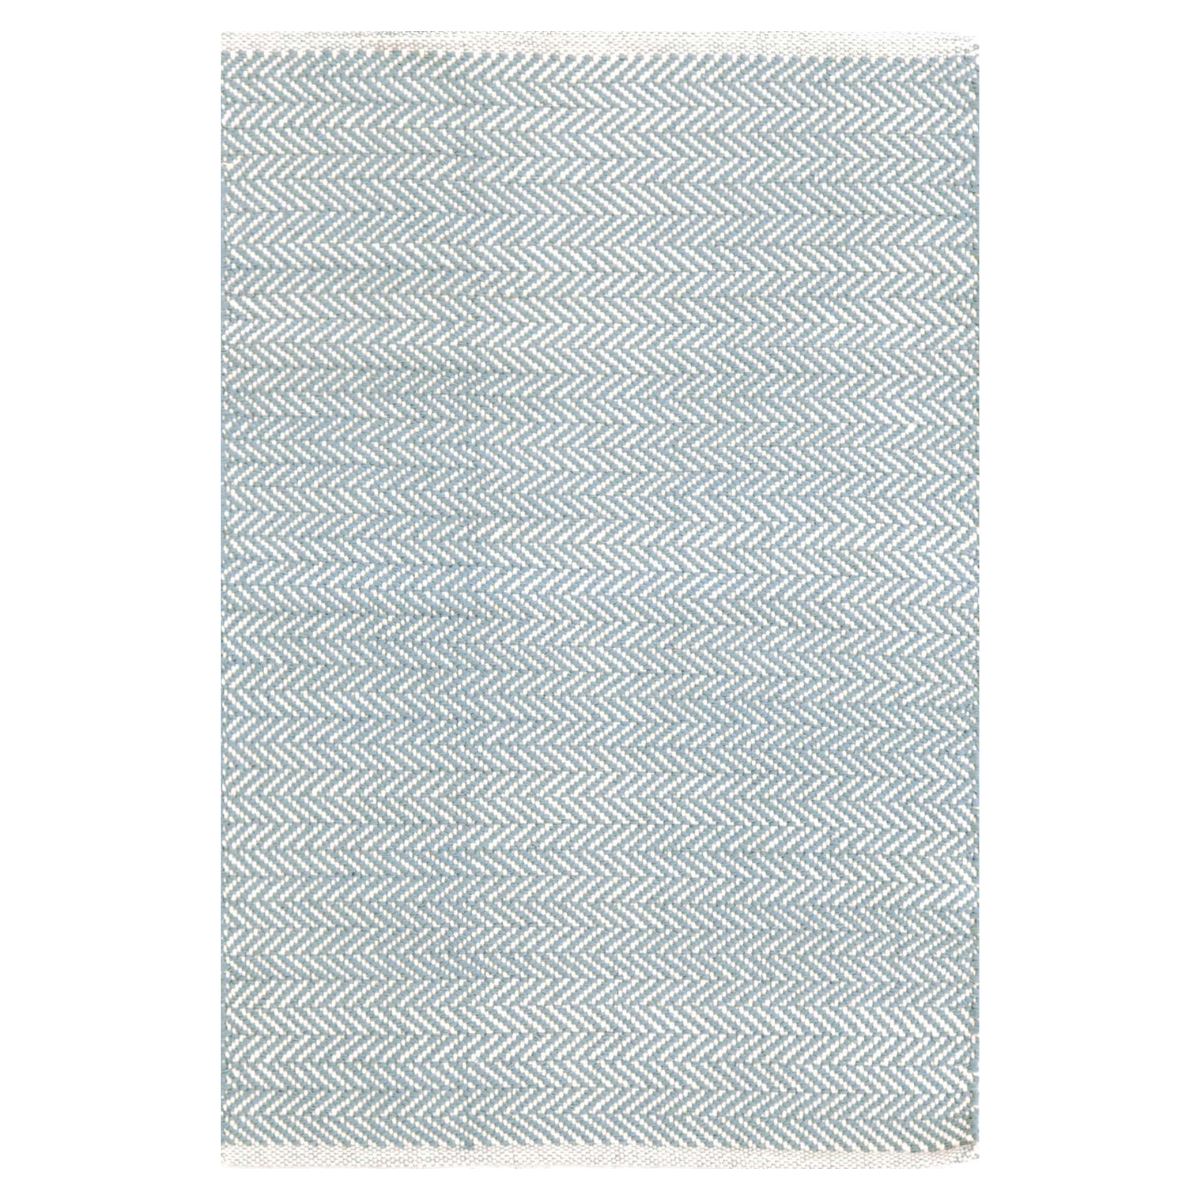 Herringbone Swedish Blue Woven Cotton Rug. Top view. 